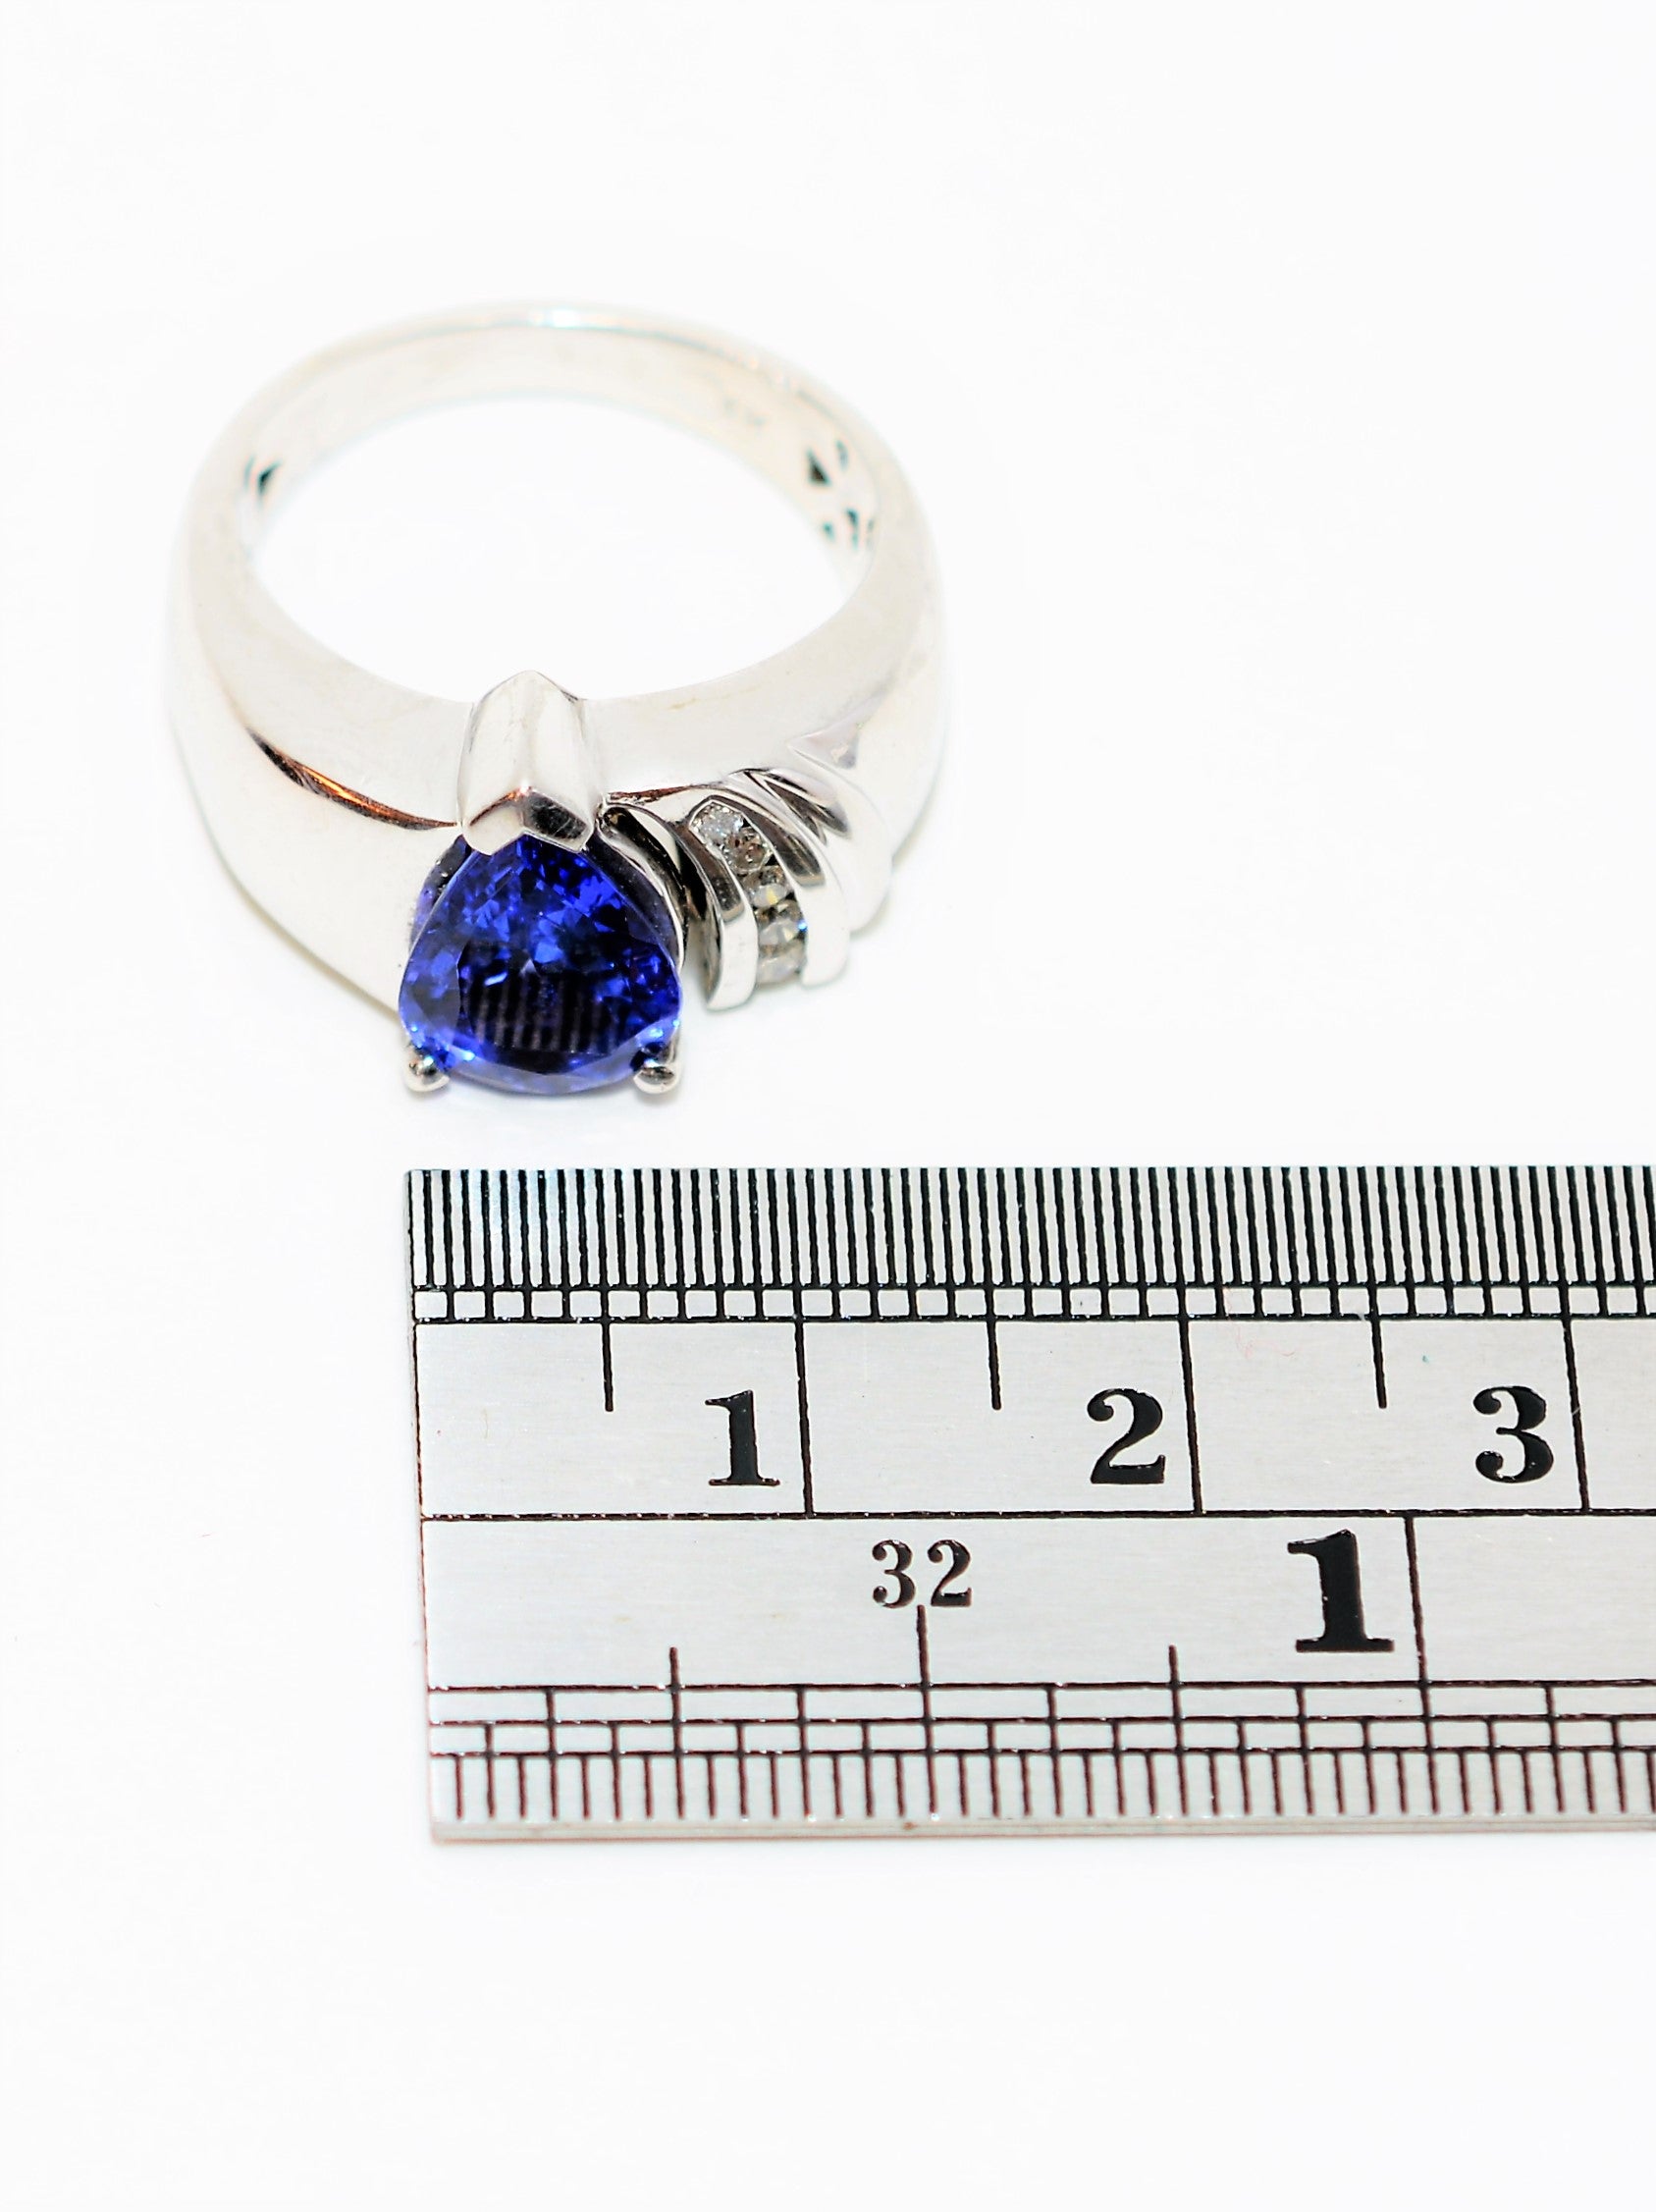 Natural D'Block Tanzanite & Diamond Ring 14K Solid White Gold 2.10tcw Bold Gemstone Pear Cut Fine Vintage Estate Jewelry